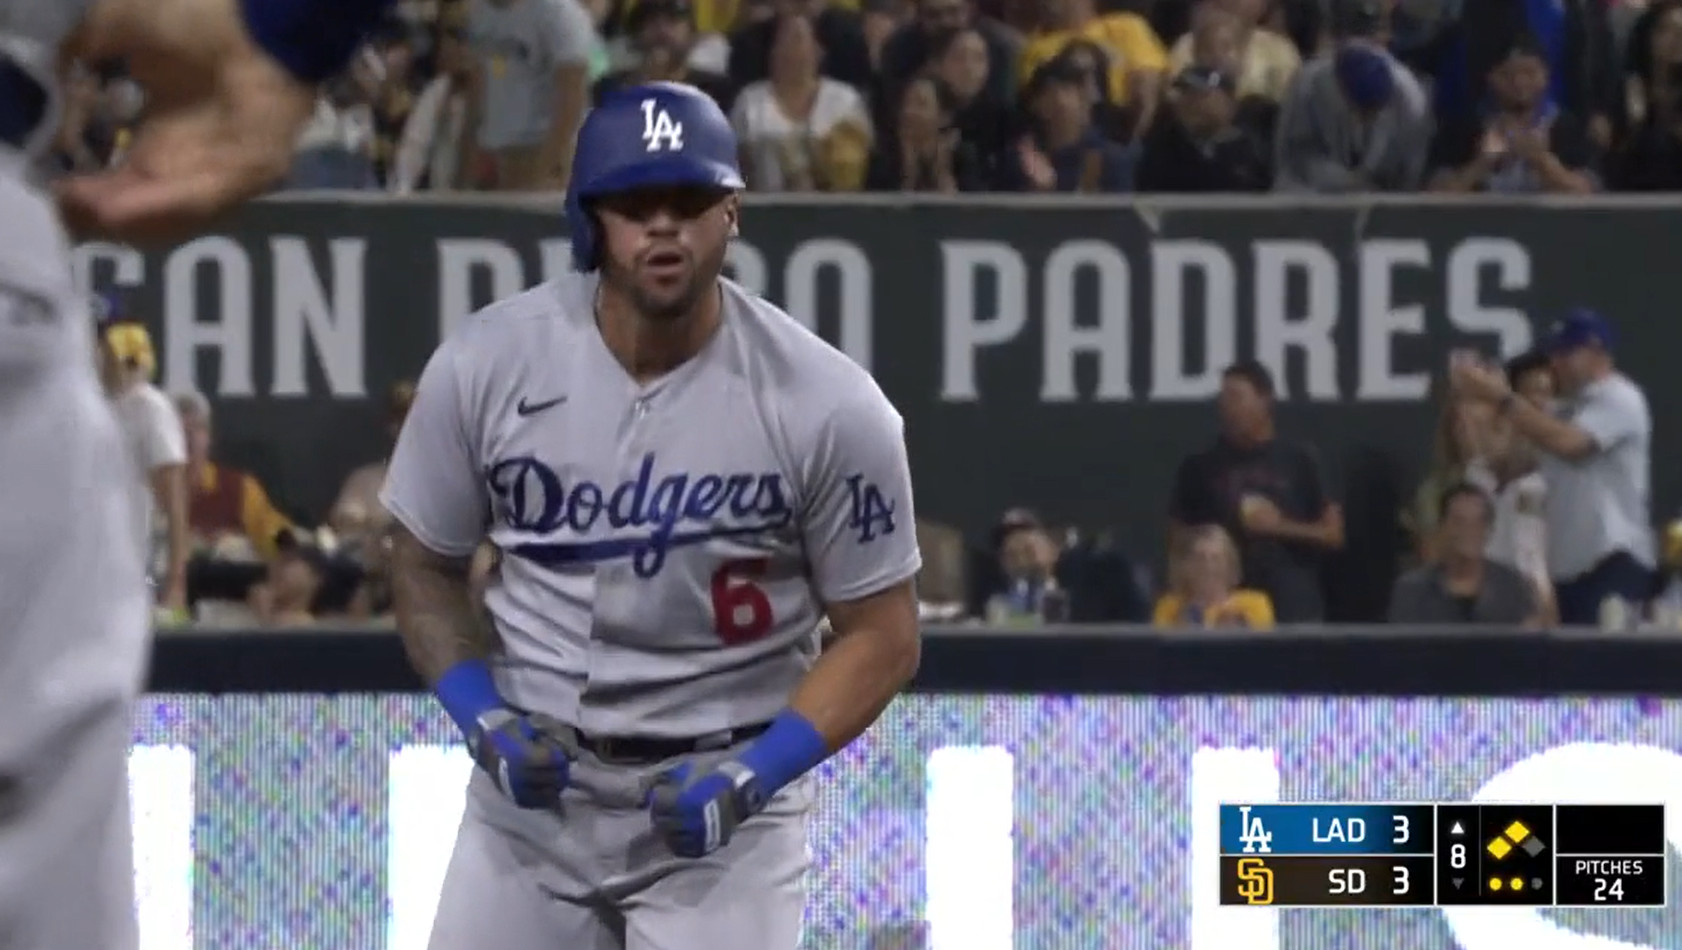 Dodgers 10, Padres 5: Choo Choo Man leads 5-run rally in the 8th